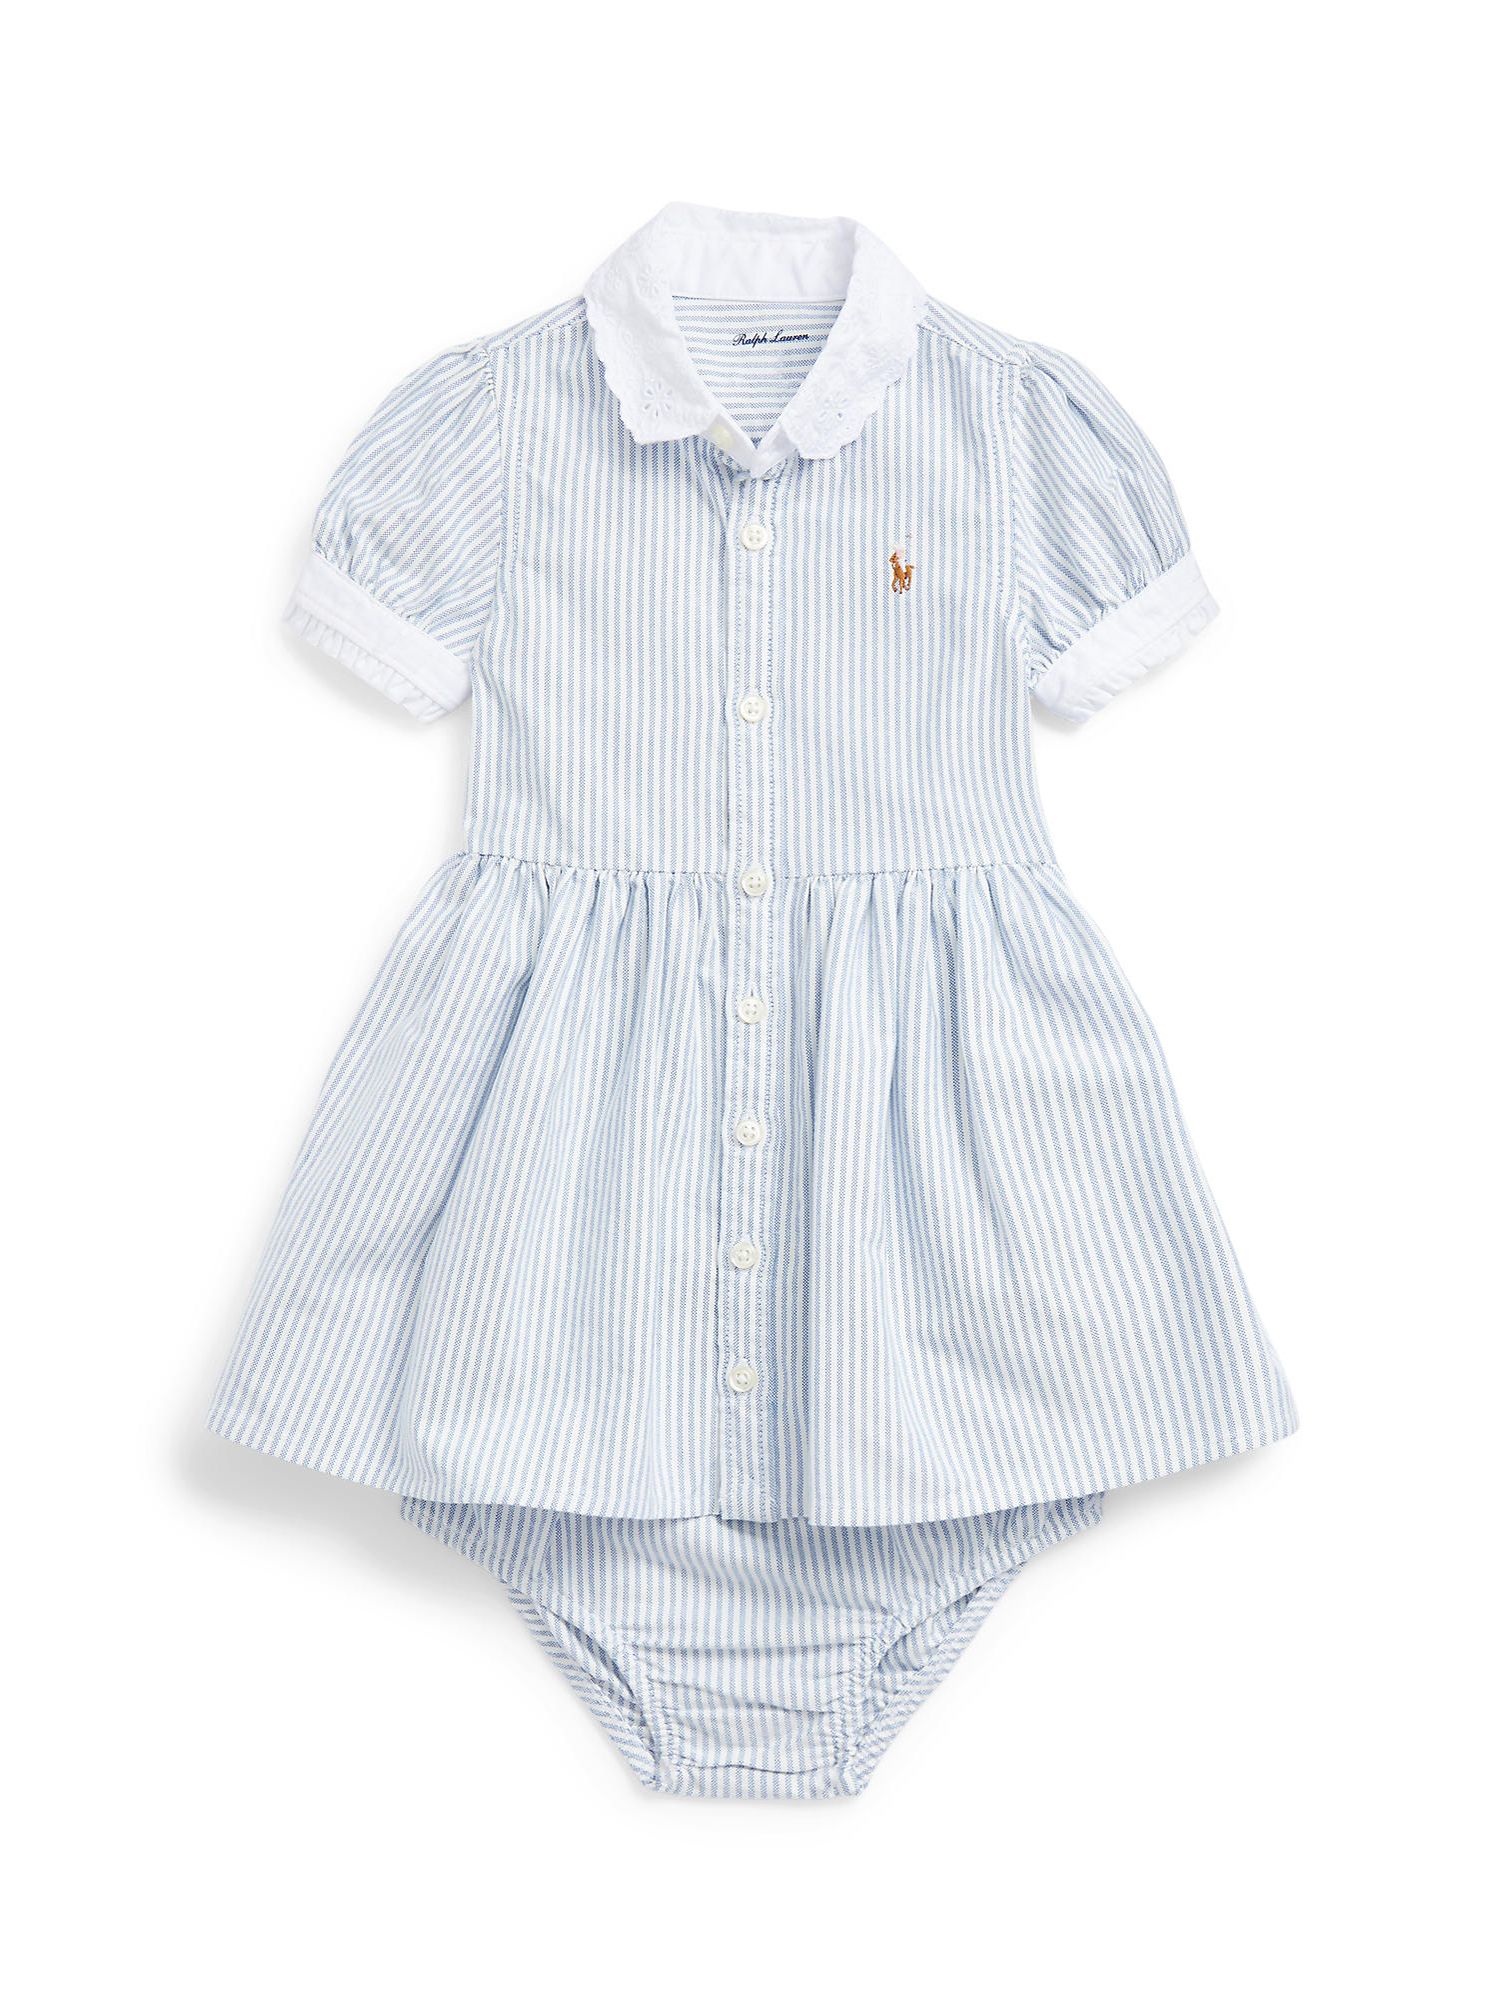 Polo Ralph Lauren Baby Stripe Shirt Dress, Blue/White at John Lewis ...